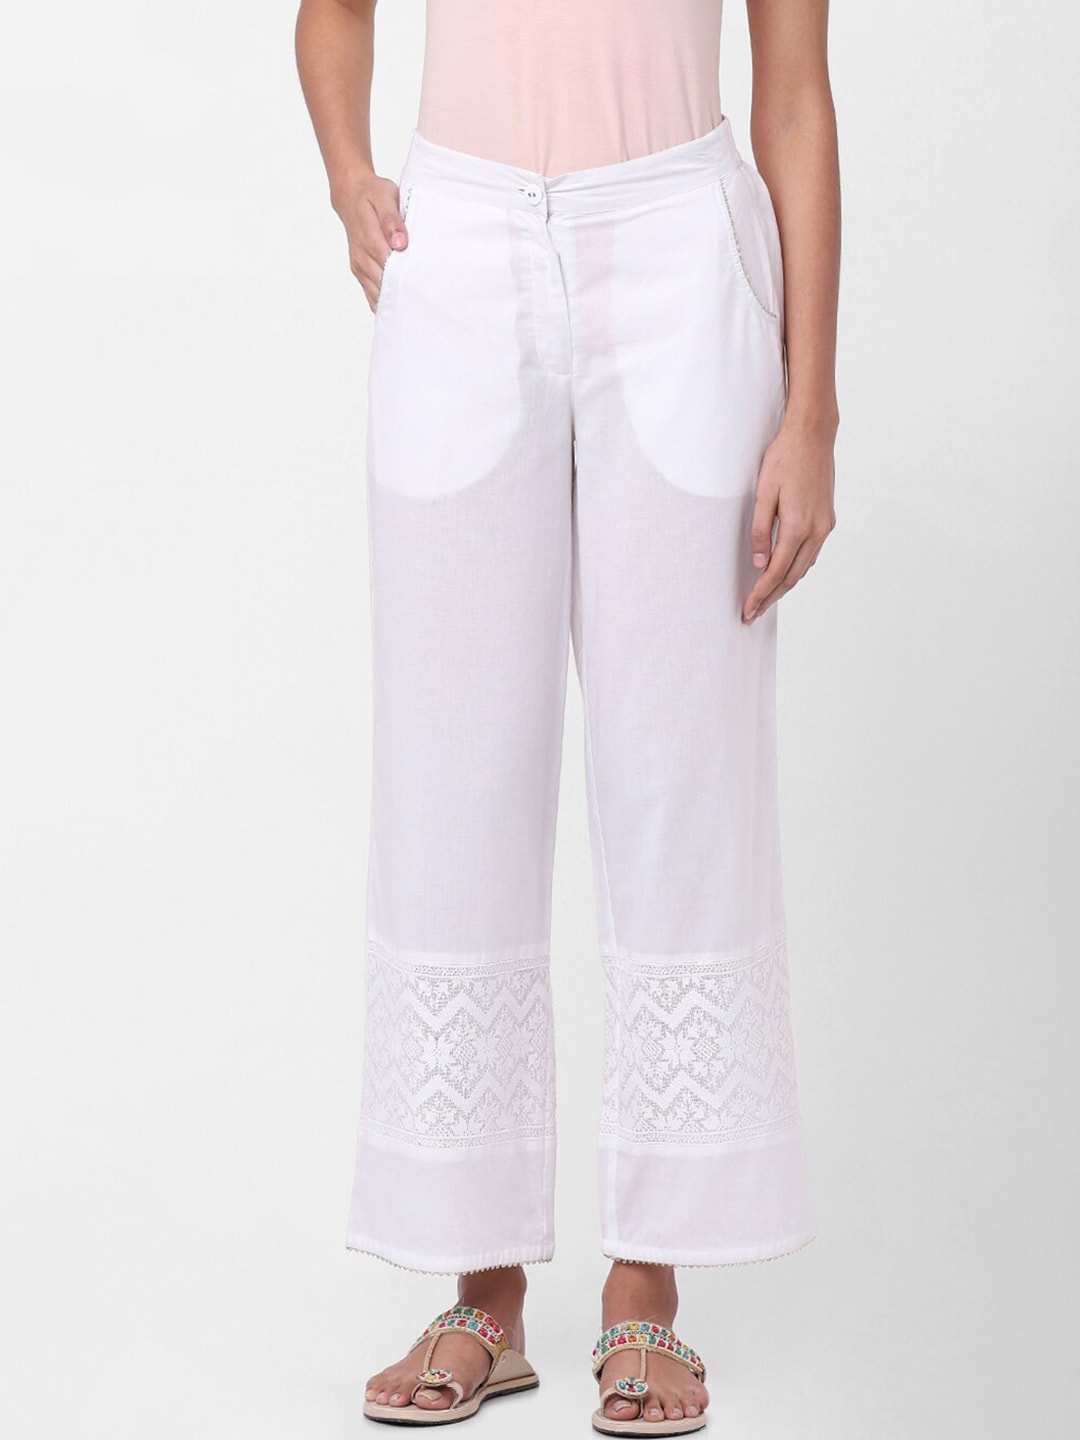 Naari Women White Cotton Slim Fit Trousers Price in India